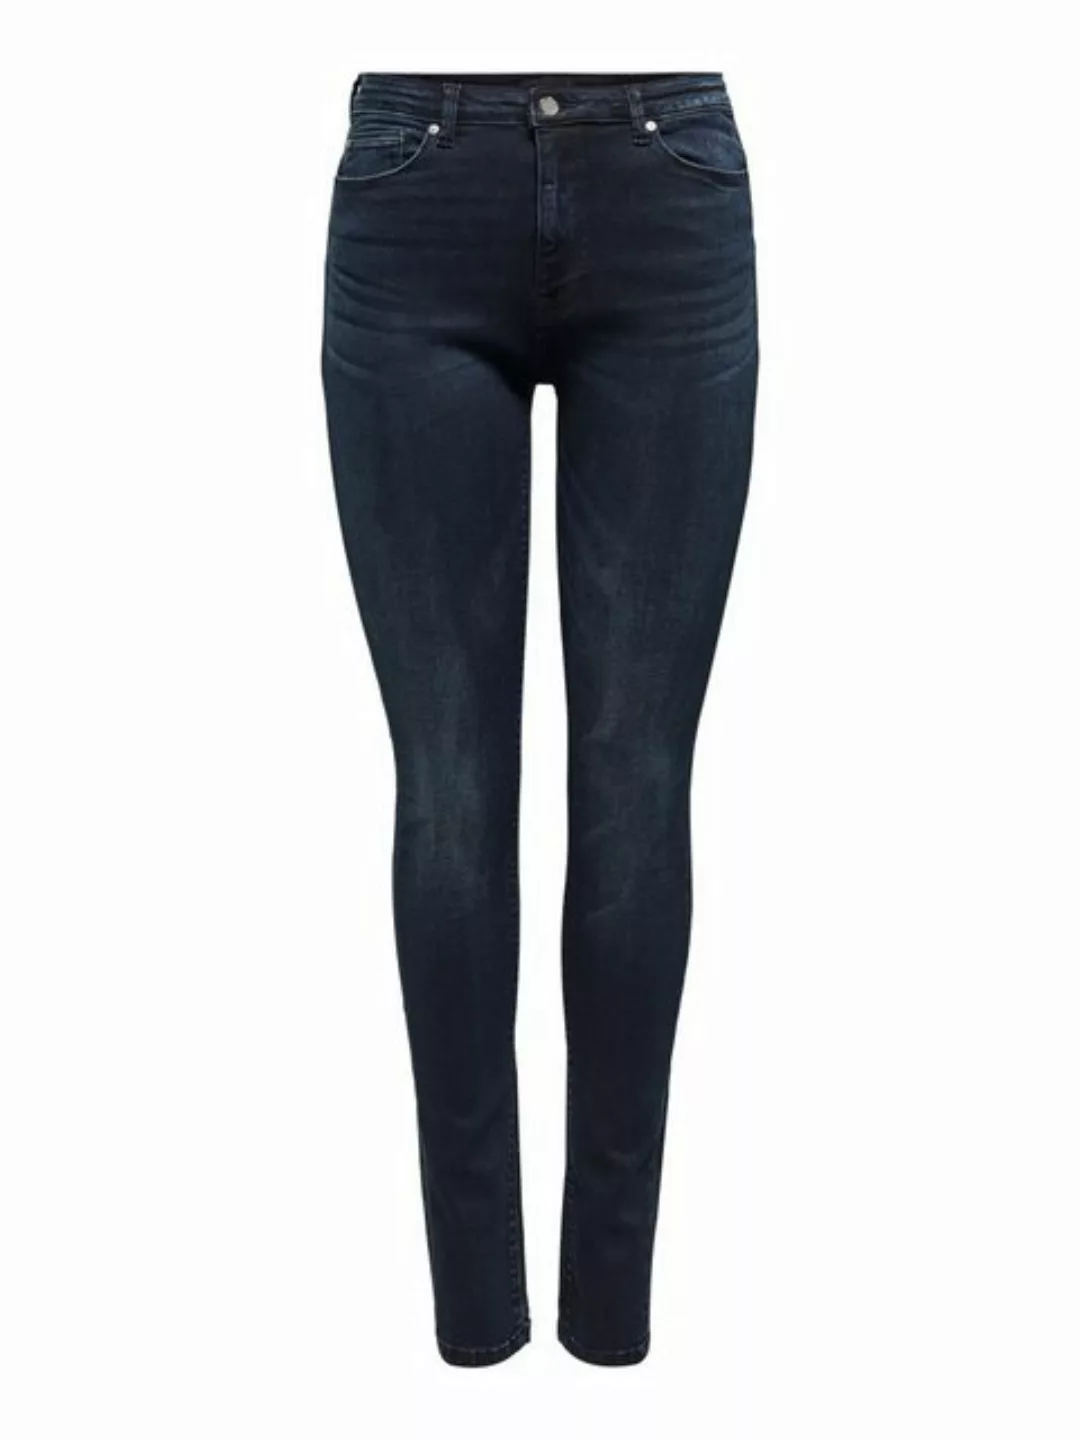 Only Paola Lige High Waist Skinny Bb Az921 Jeans XS Blue Black Denim günstig online kaufen